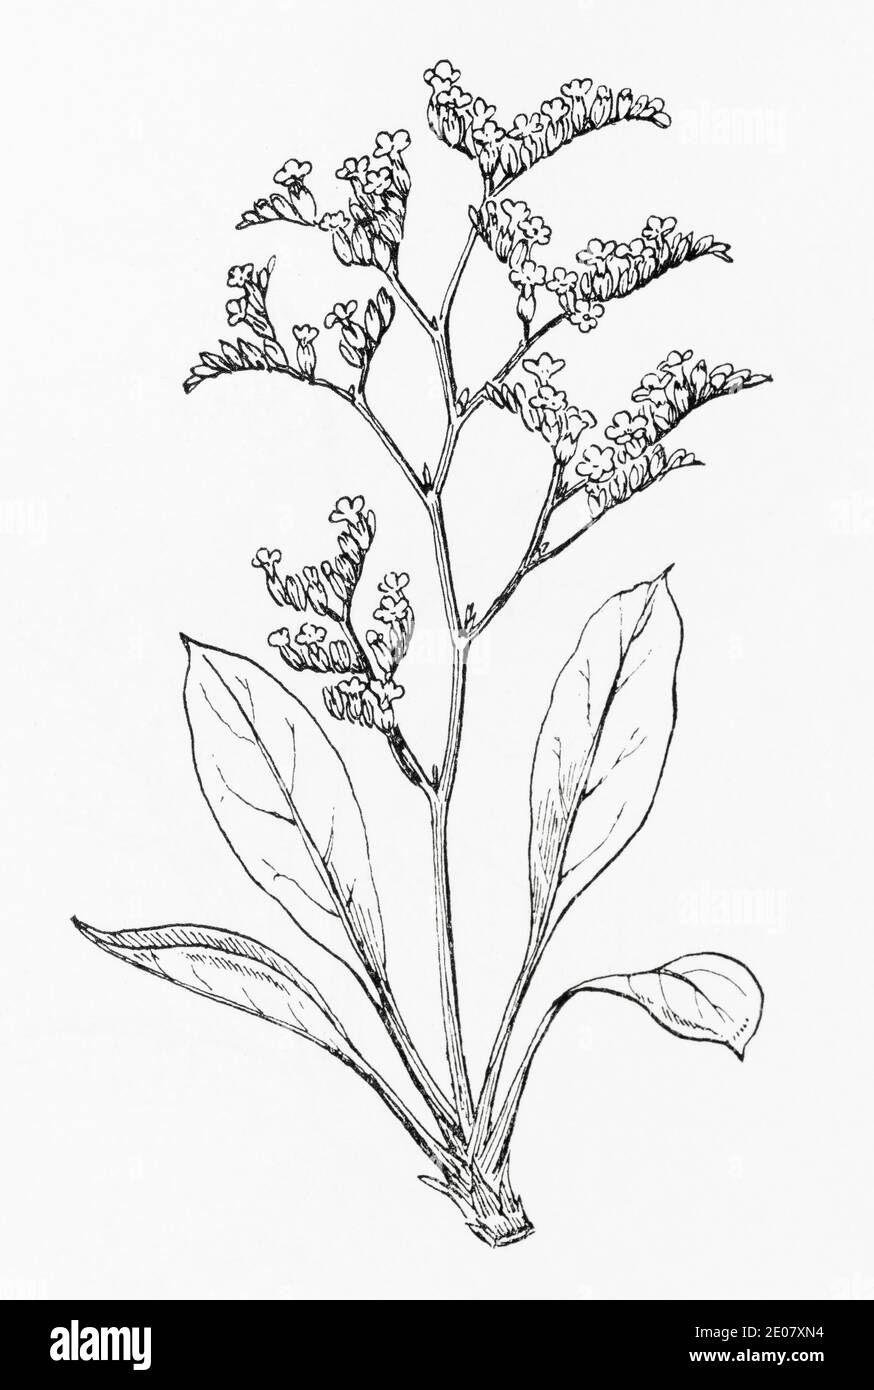 Alte botanische Illustration Gravur von Lax-blühenden Meereslavender / Limonium humile, Statice rariflora. Siehe Hinweise Stockfoto